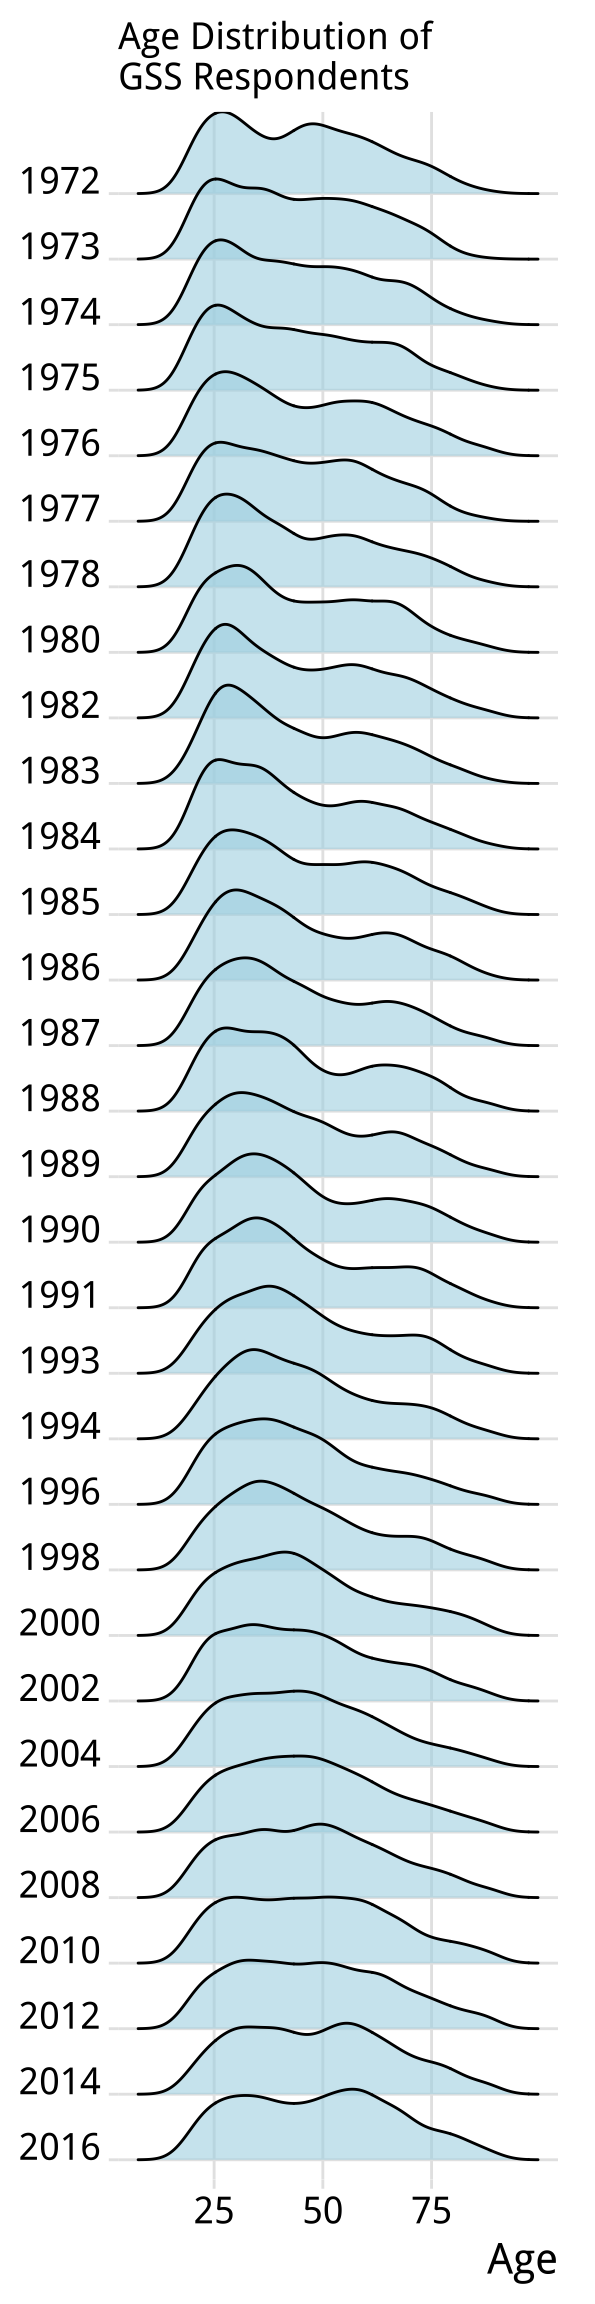 A ridgeplot version of the age distribution plot.